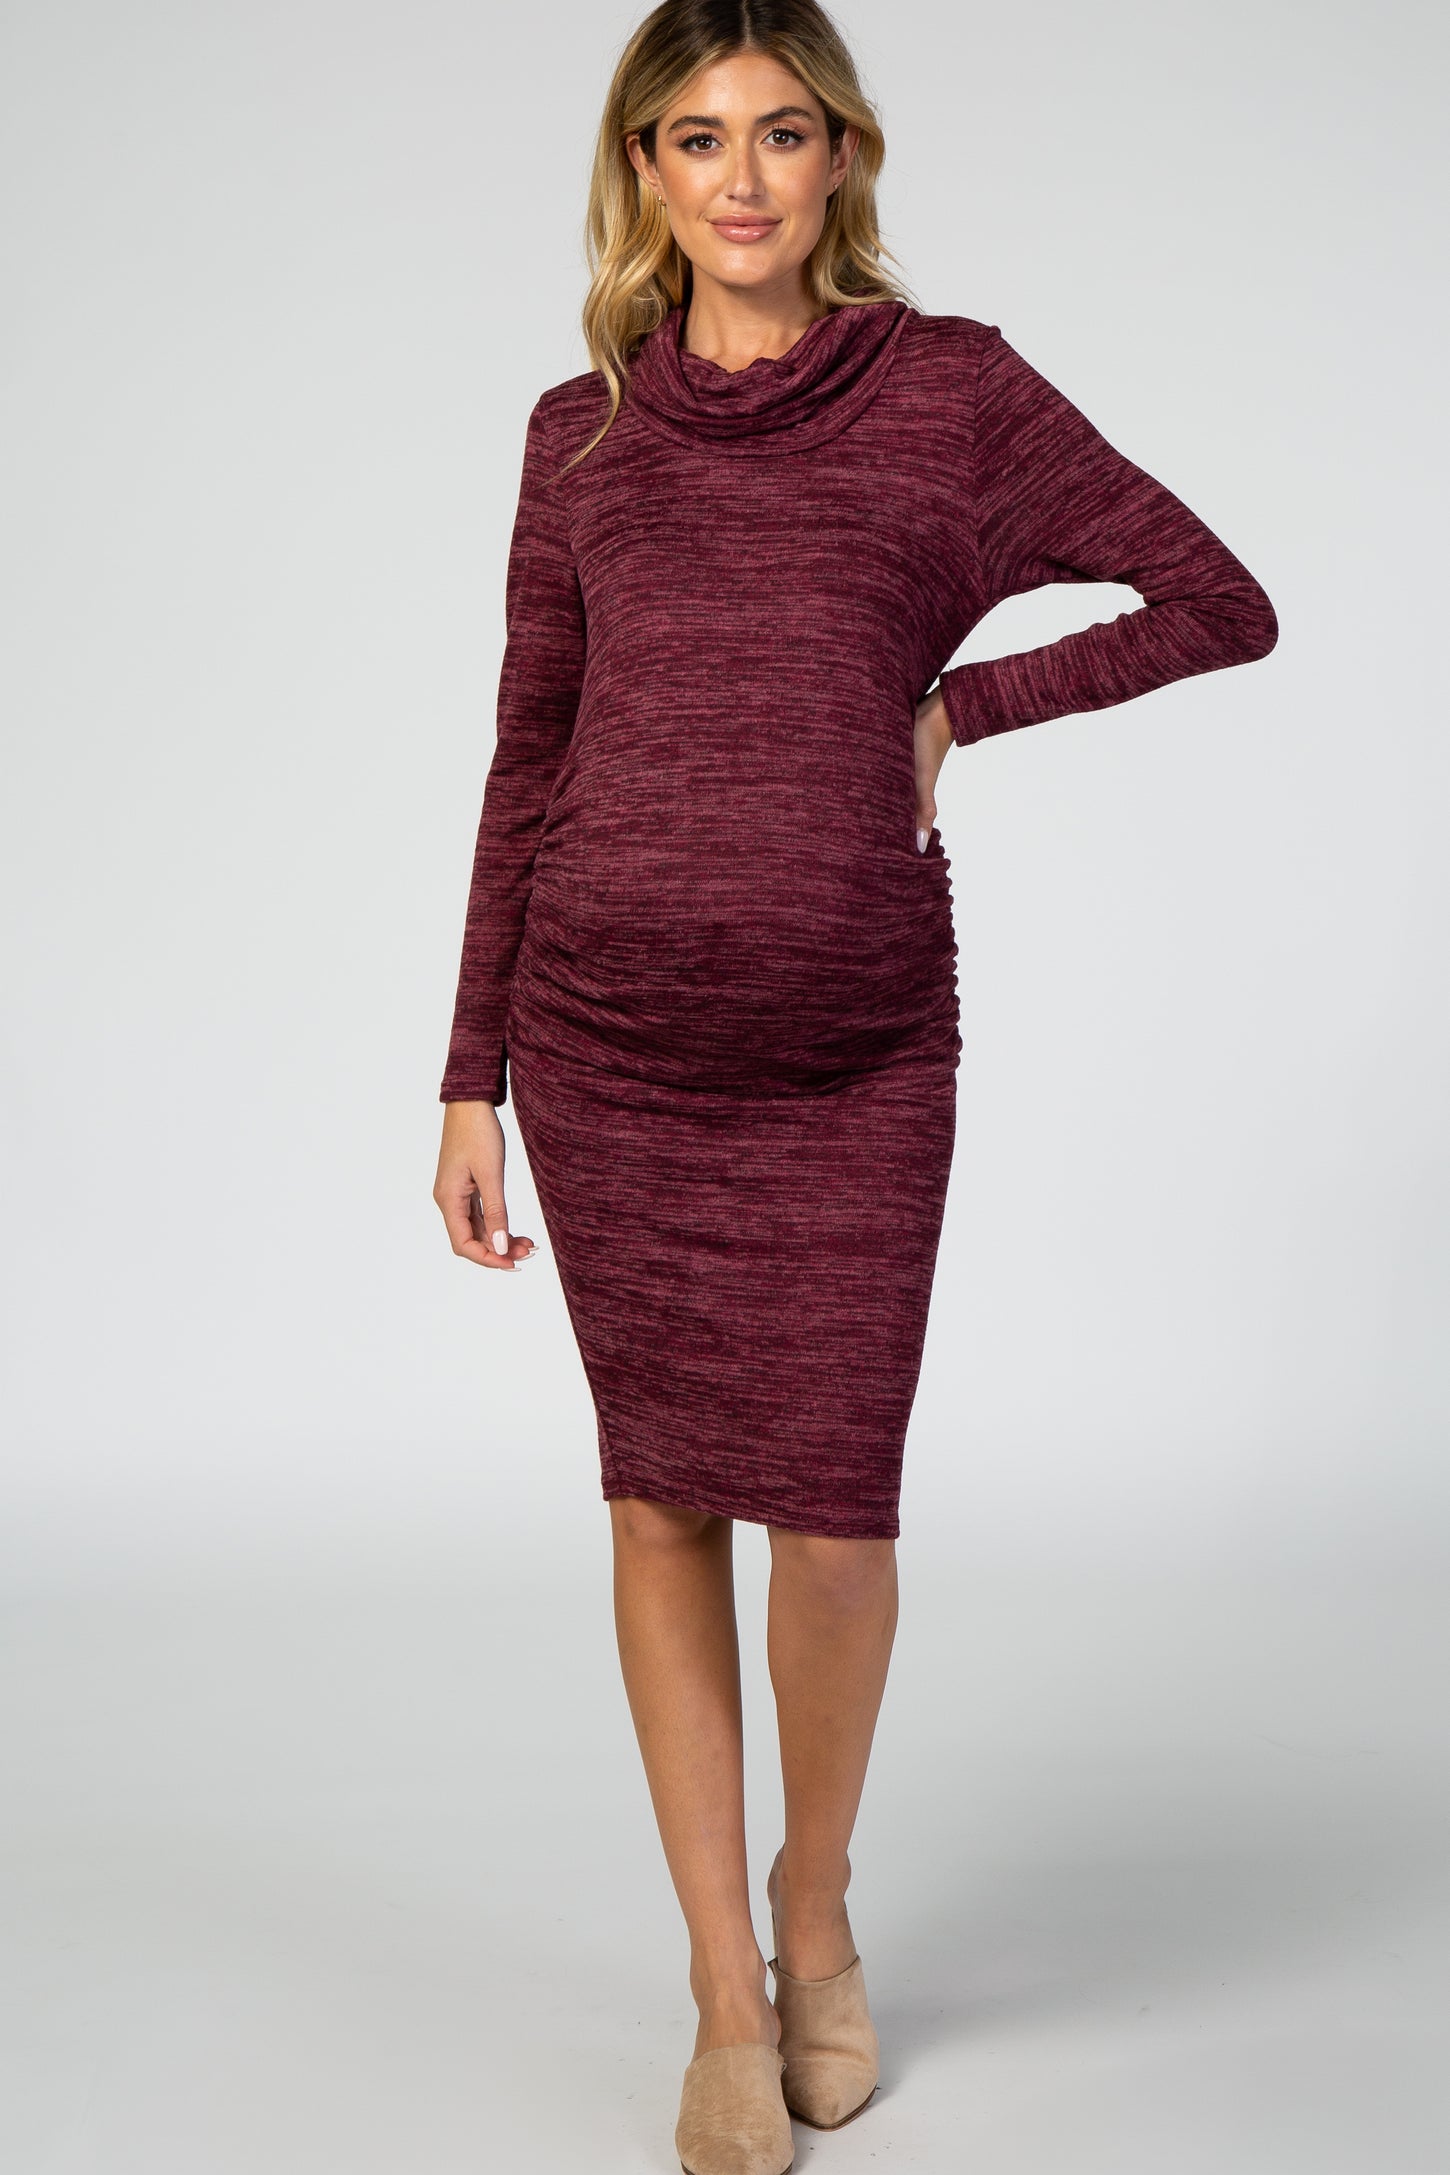 Burgundy Knit Long Sleeve Cowl Neck Maternity Dress